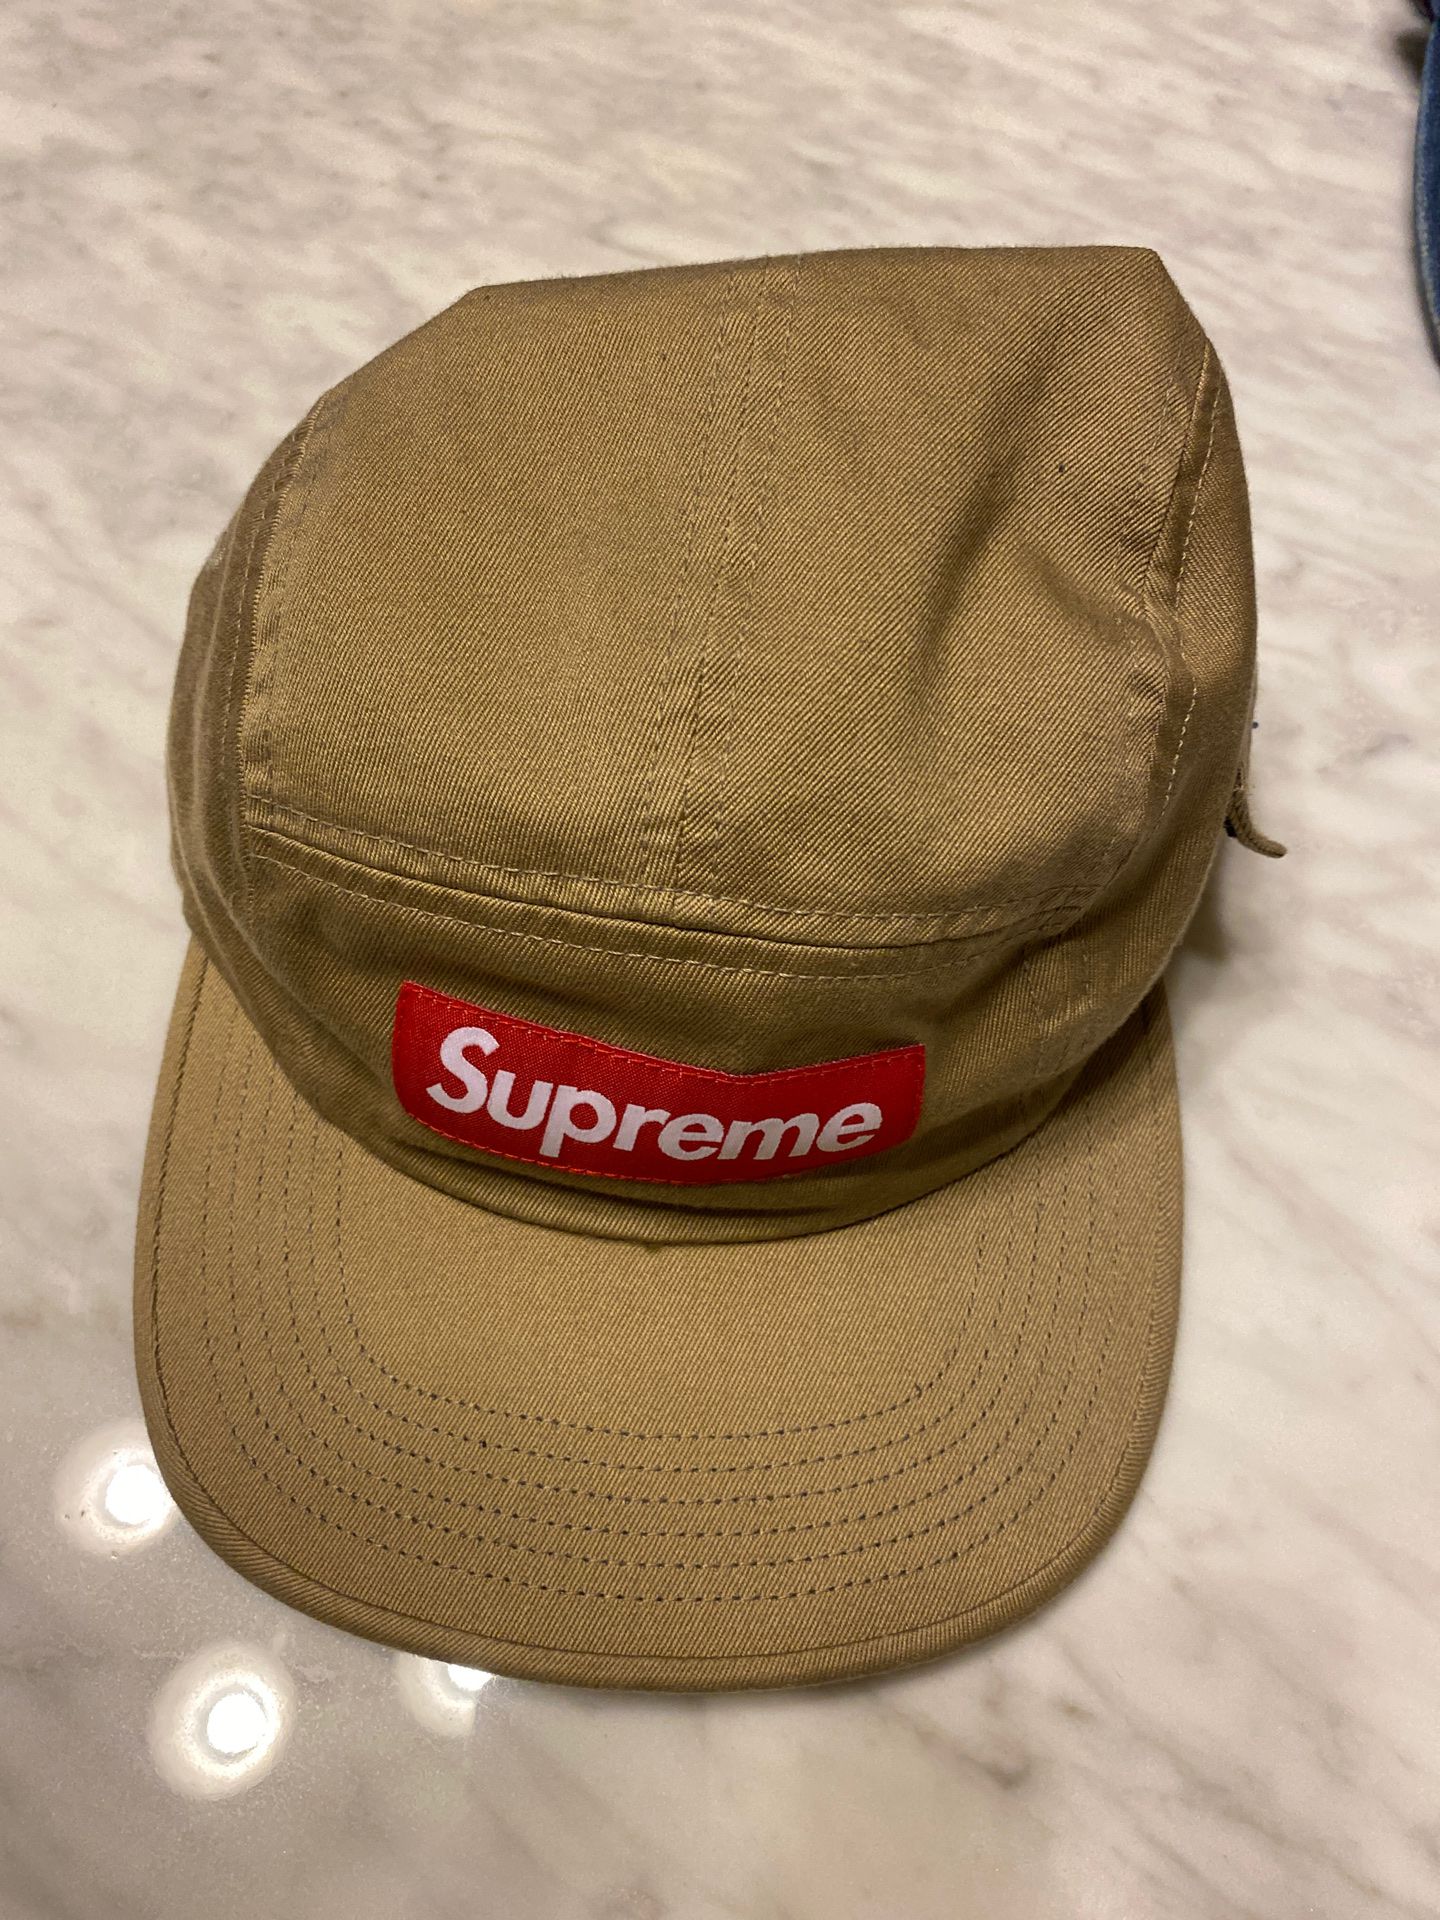 Supreme khaki hat